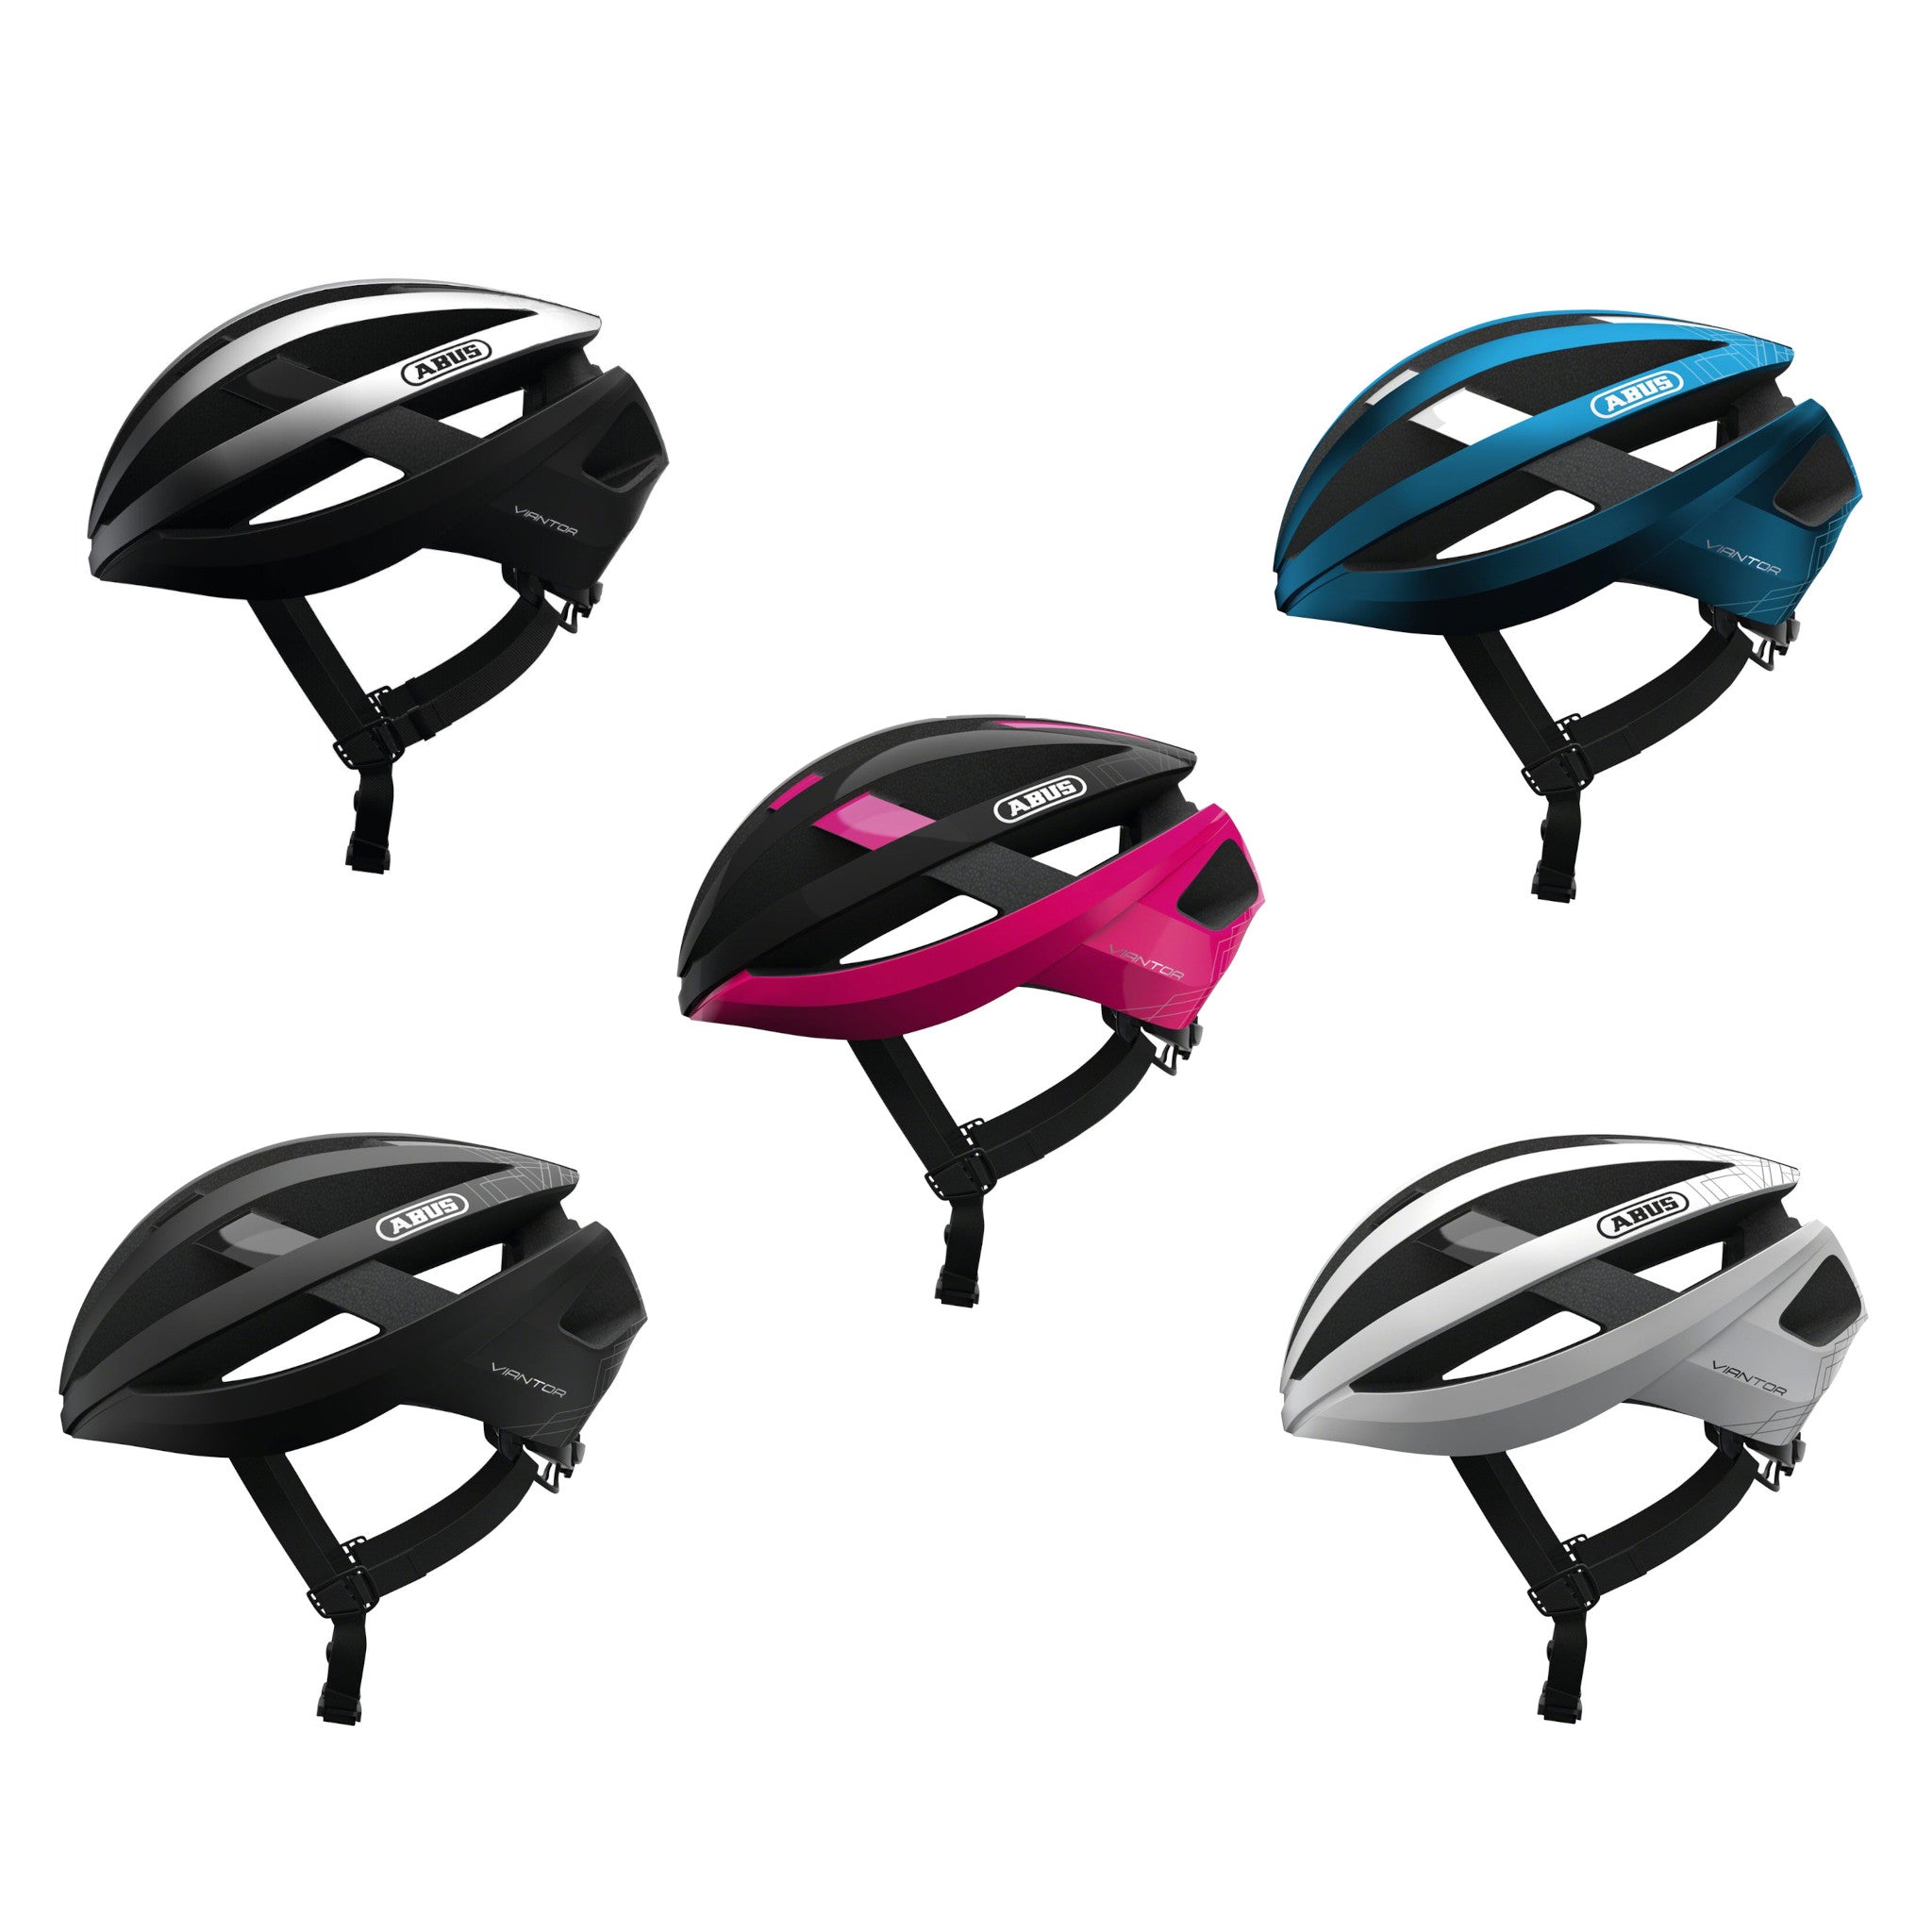 ABUS Viantor Road Bike Helmet - The Bikesmiths